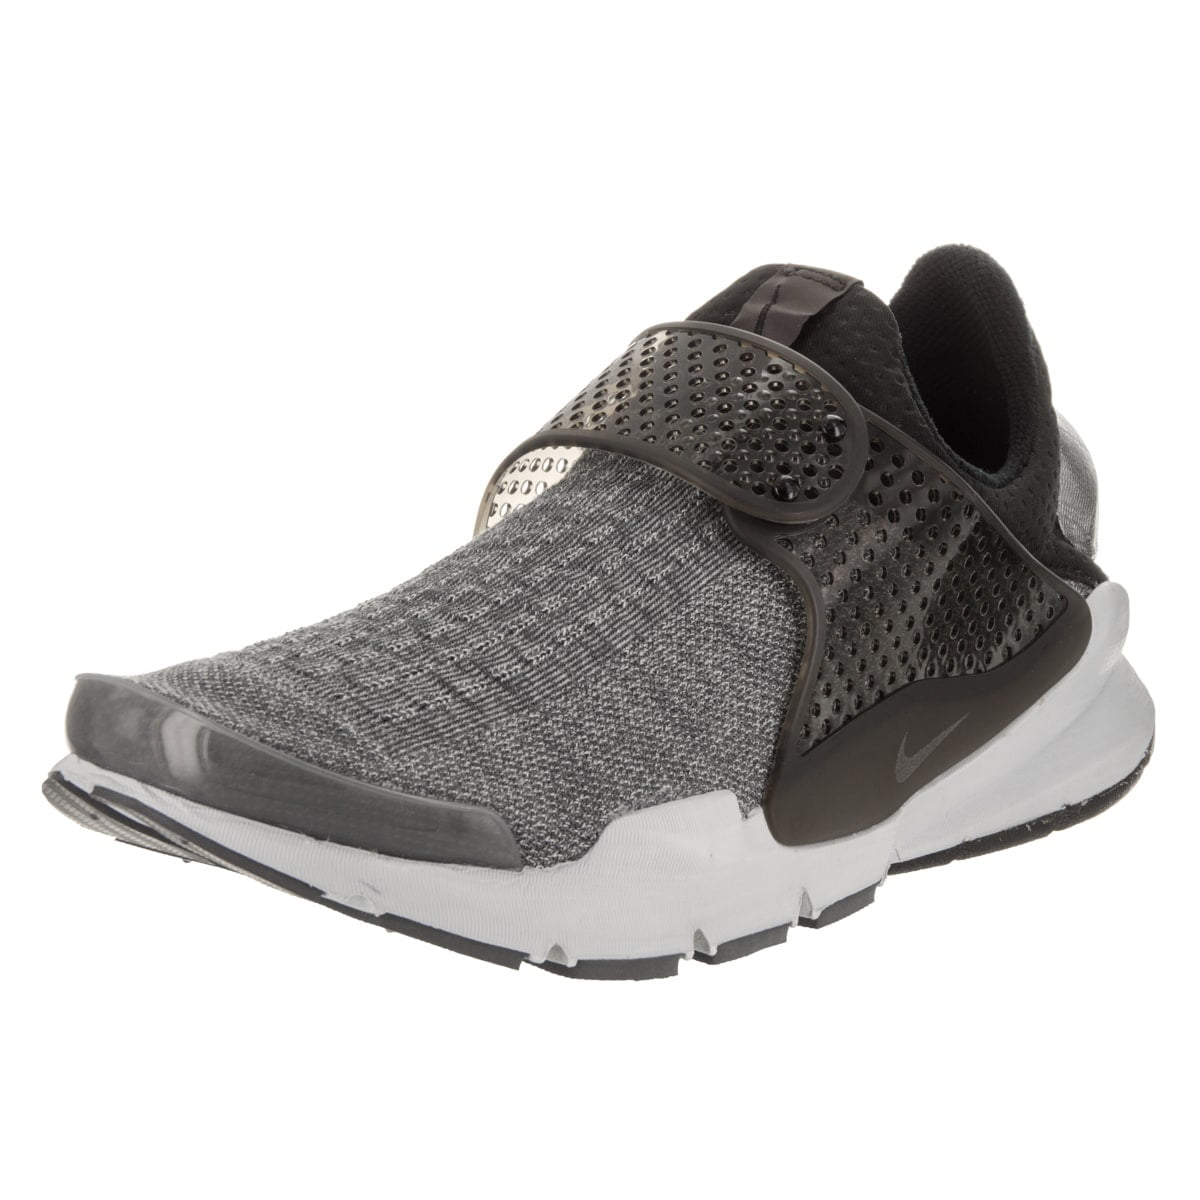 Nike Men's Sock Dart SE Premium Grey Textile Running Shoe - Walmart.com